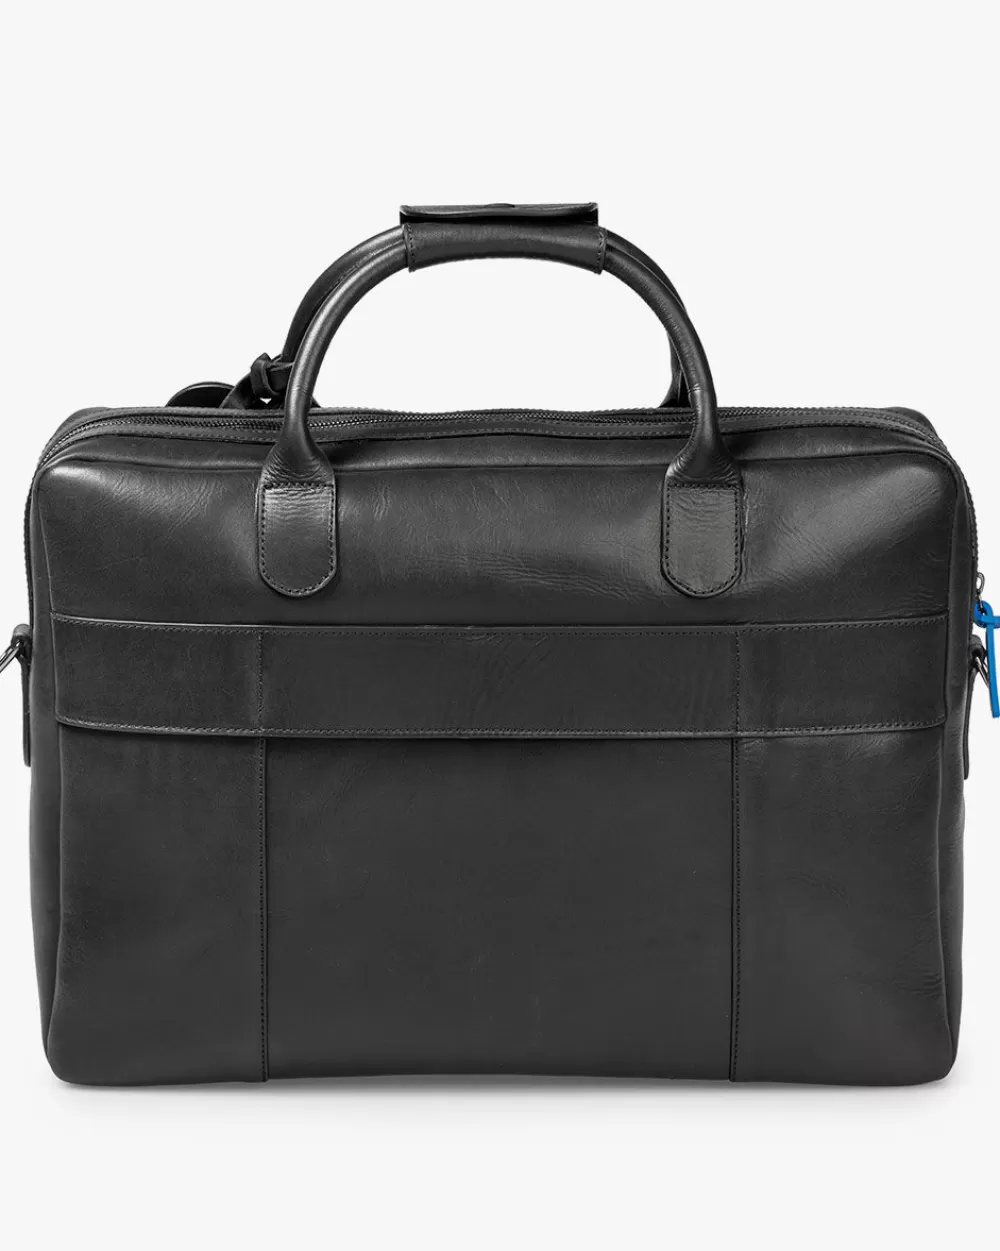 Office bag leather *Floris van Bommel Clearance